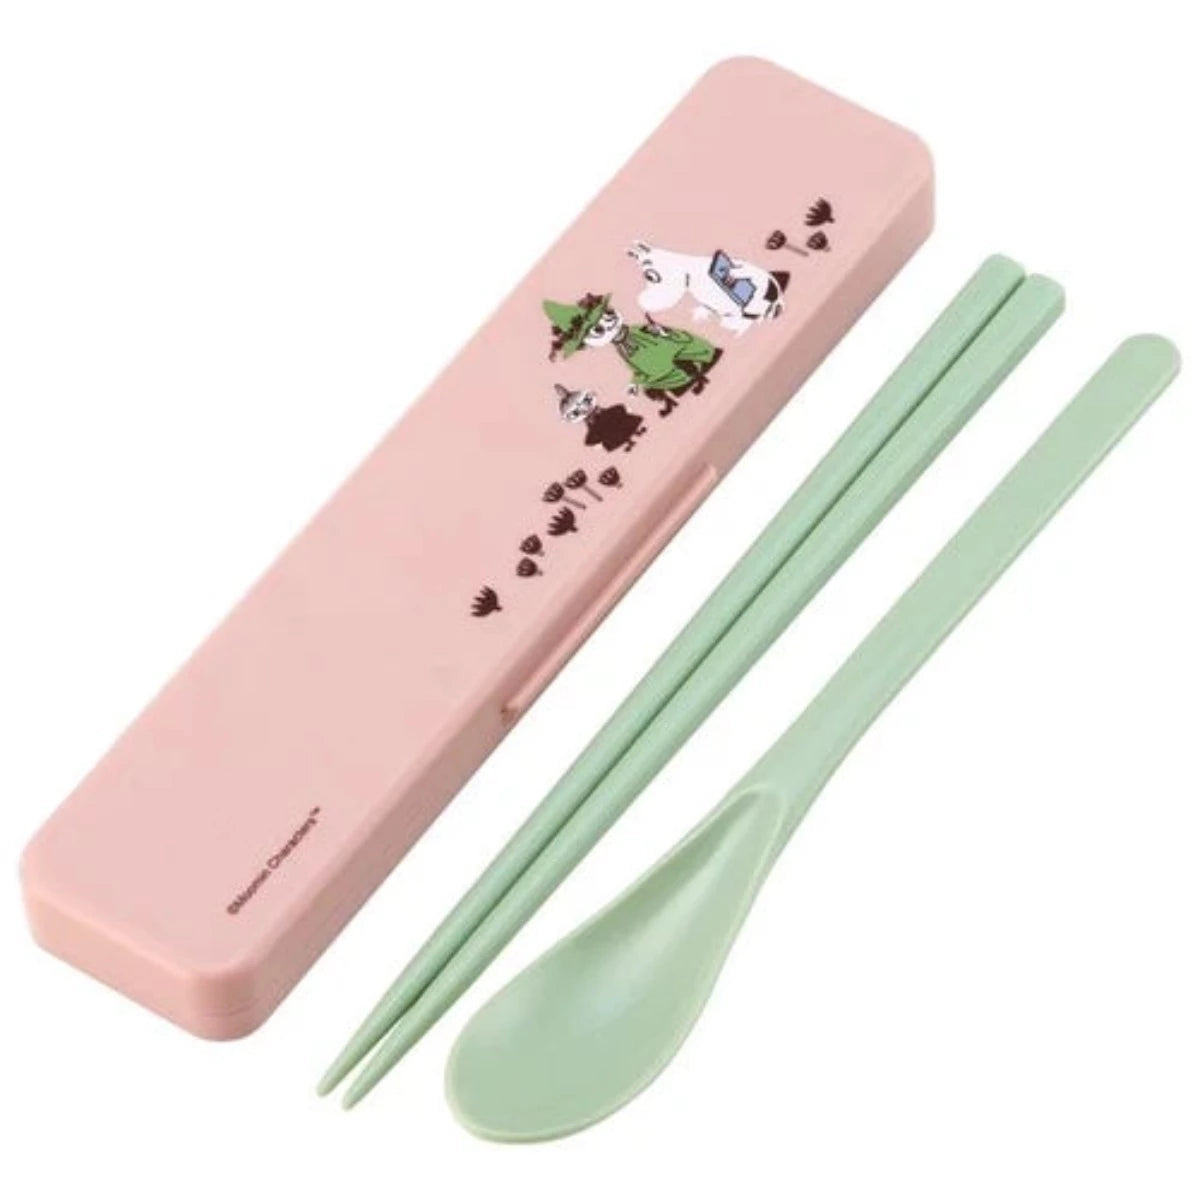 Cutlery Set Chopsticks & Spoon - The Moomins  18cm